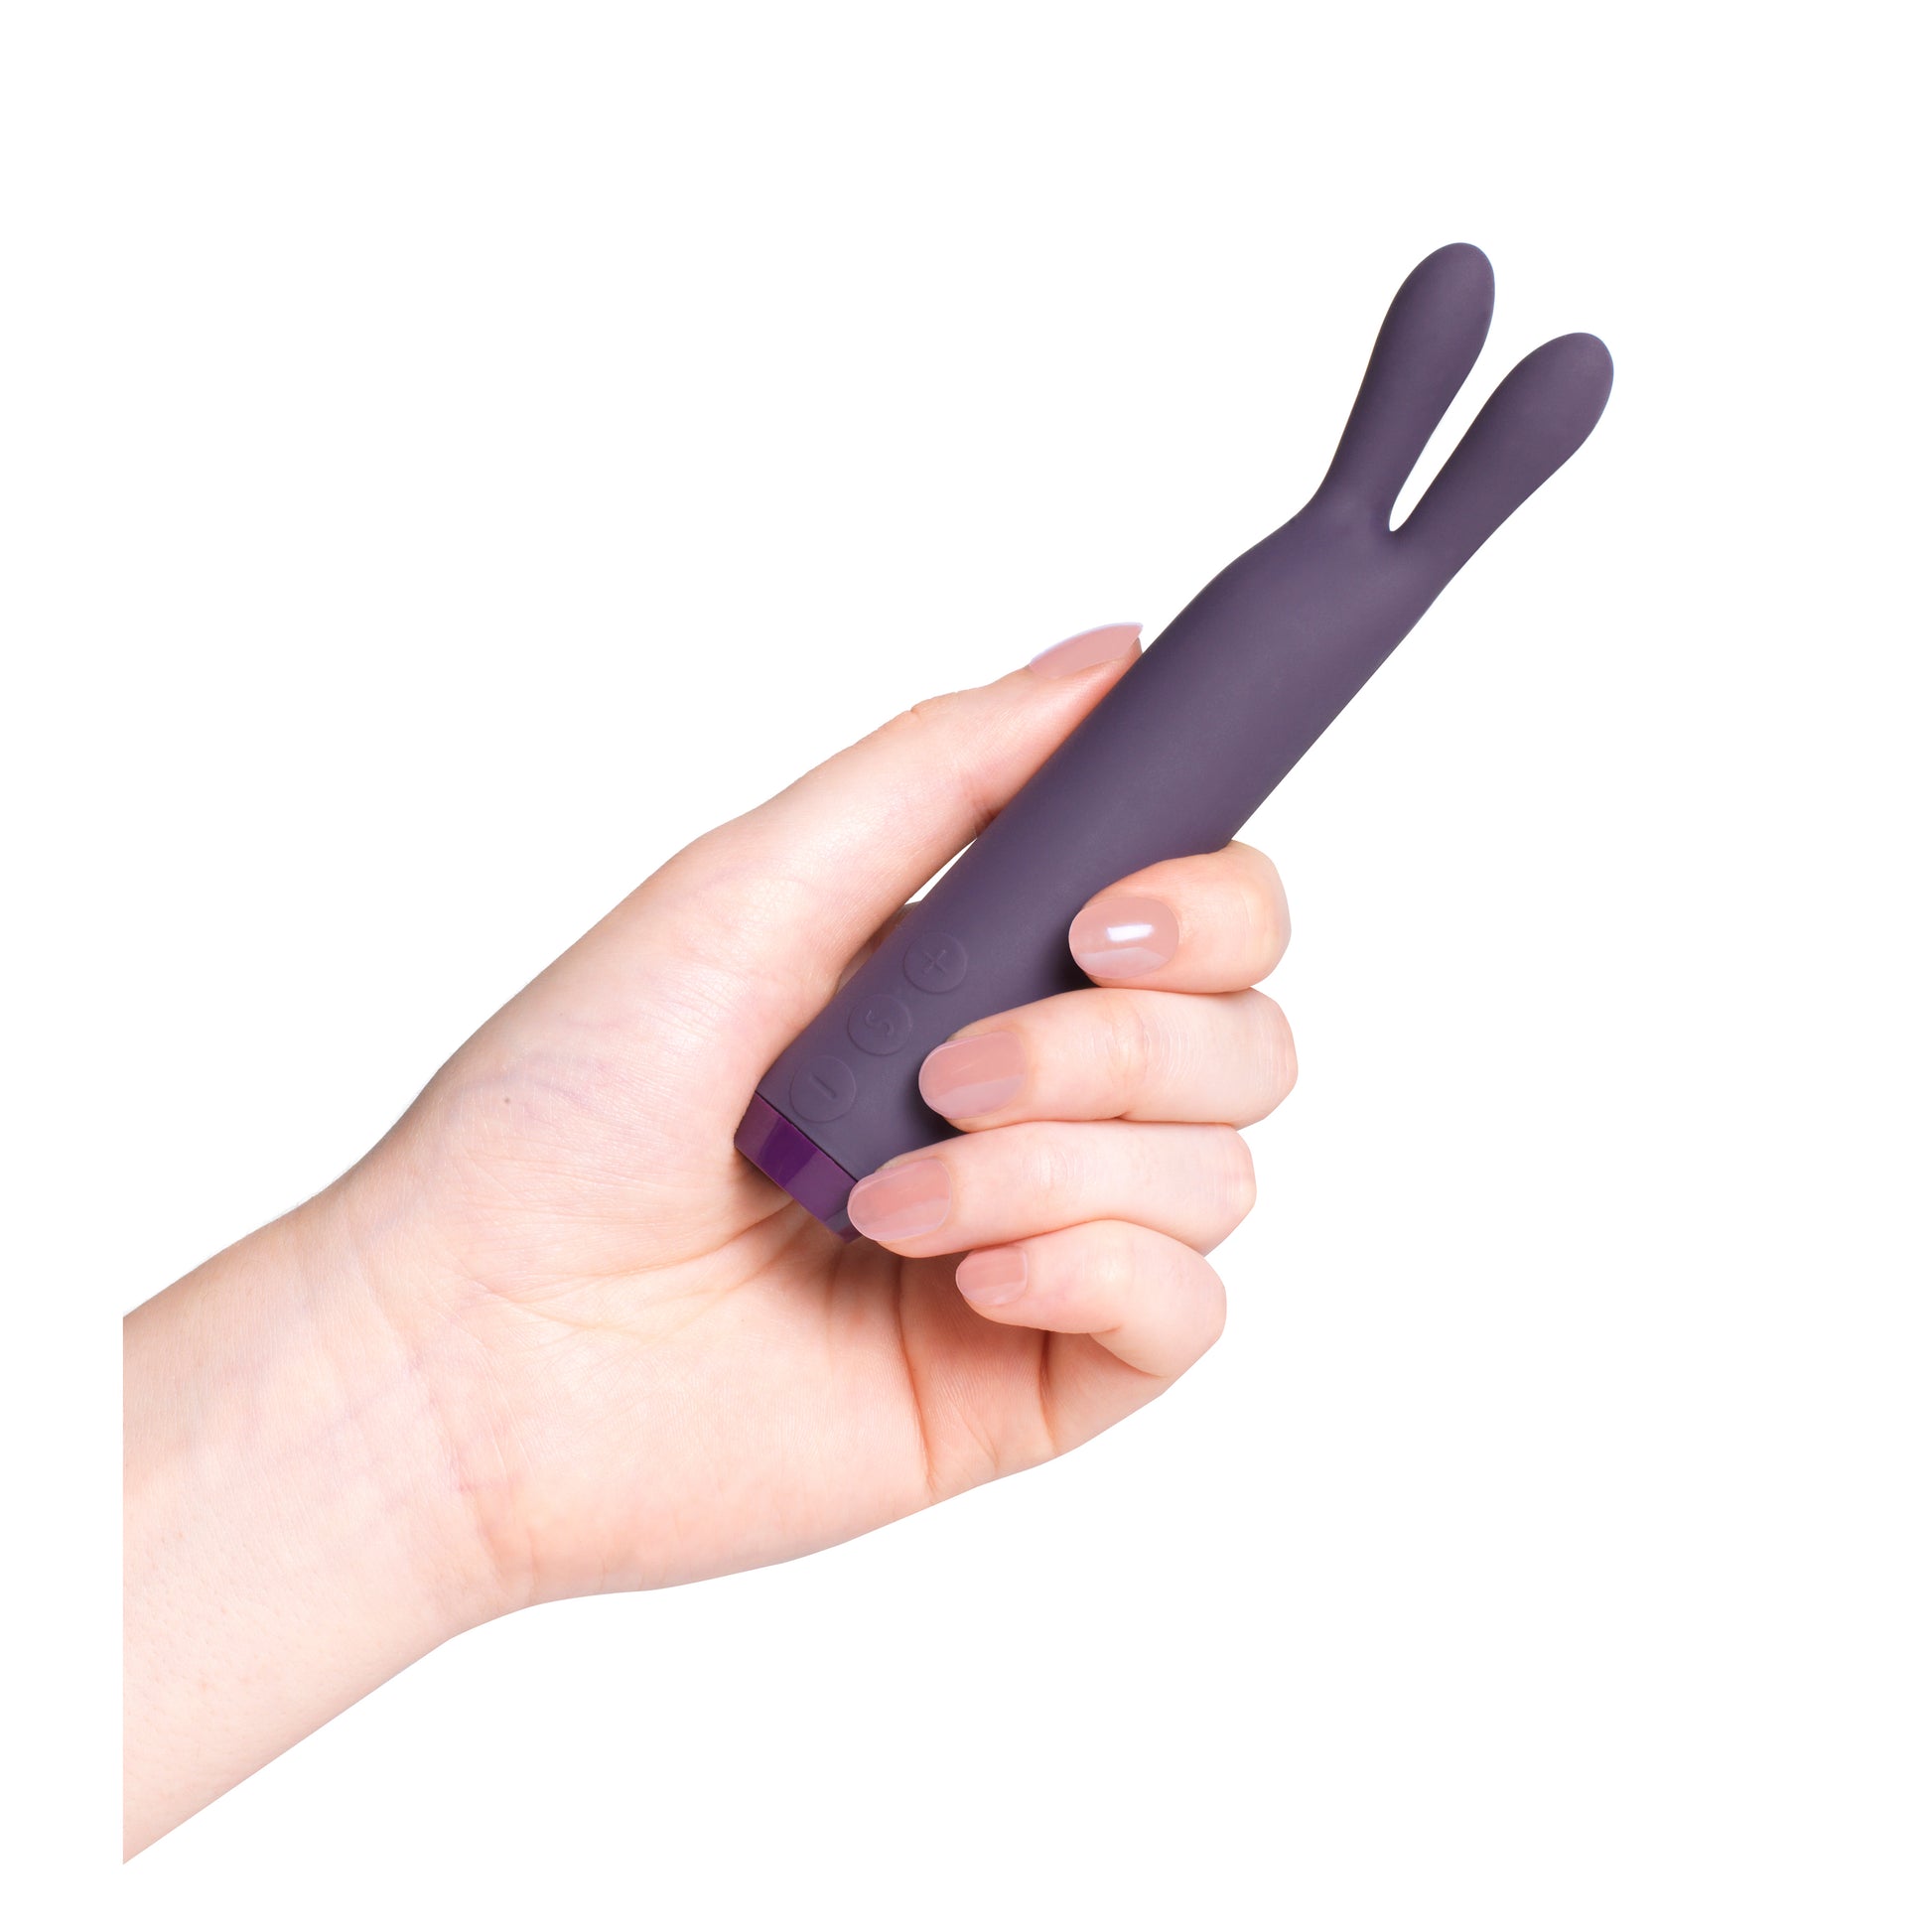 Hand holding Rabbit Bullet Vibrator in purple 